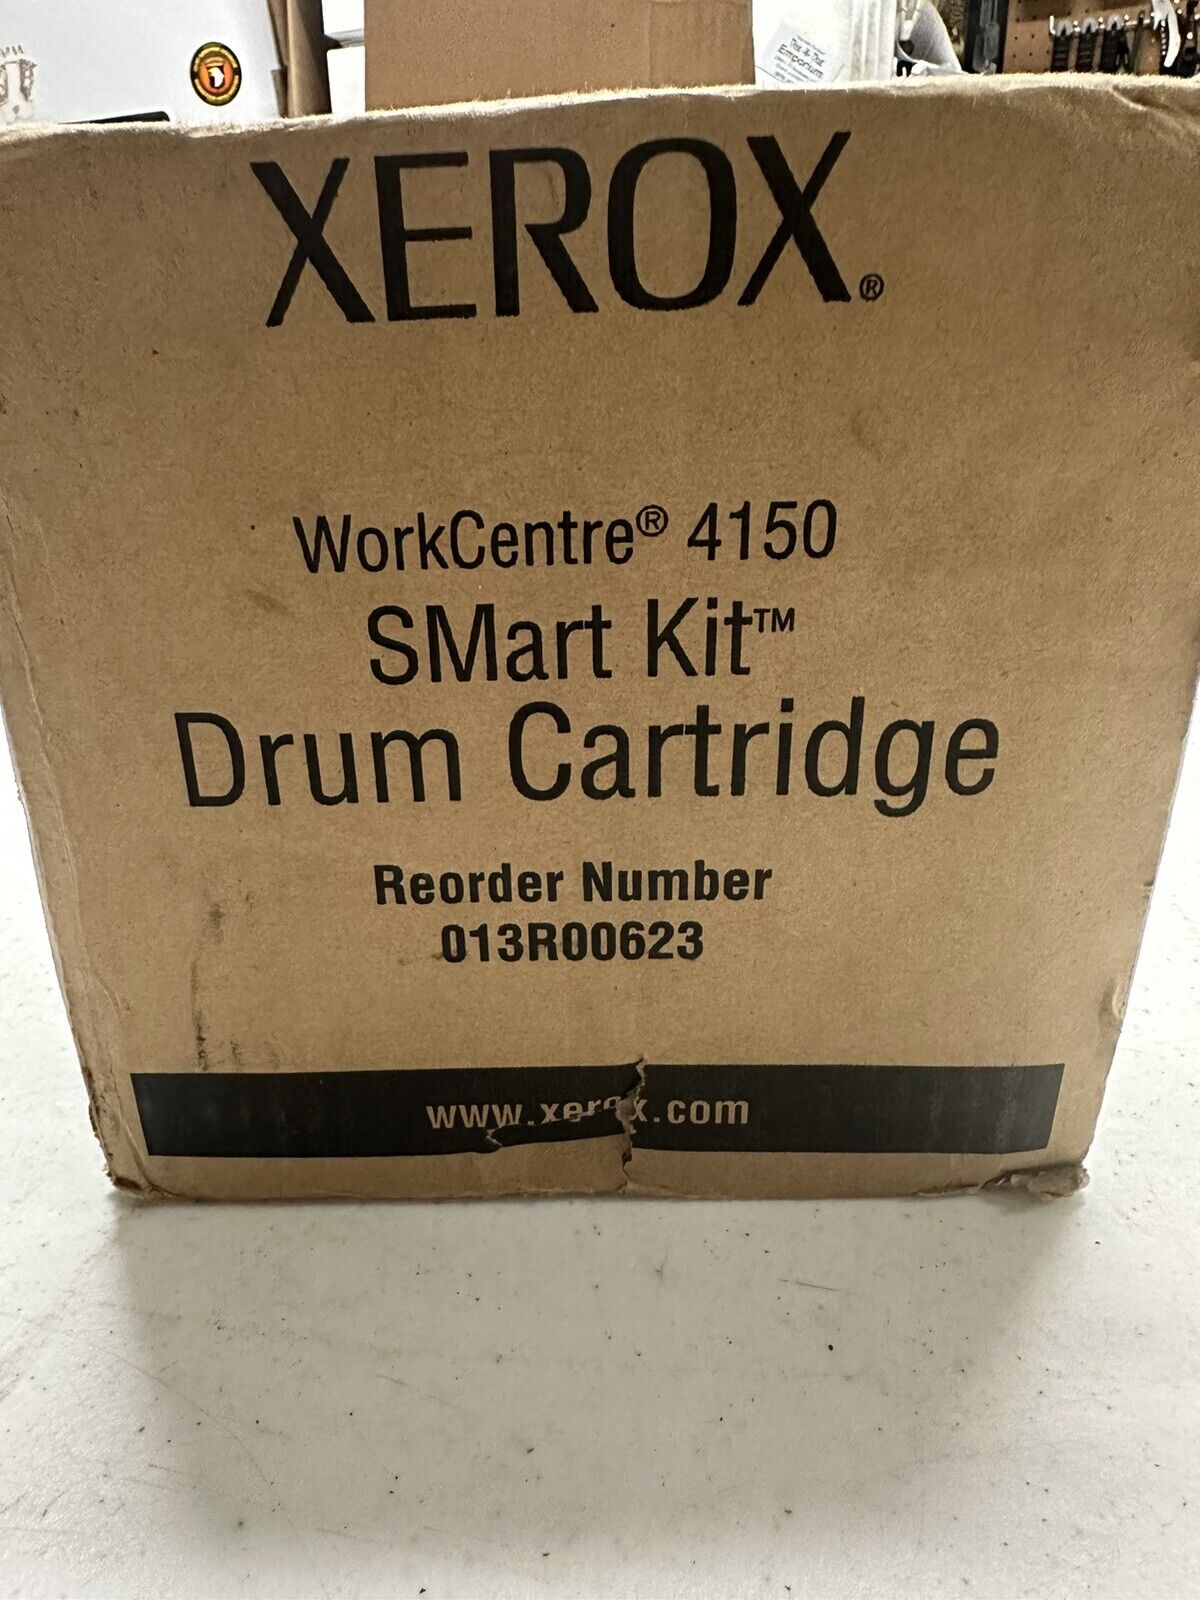 Genuine Xerox Smart Kit Drum Cartridge 013R00623 For WorkCentre 4150 NIB